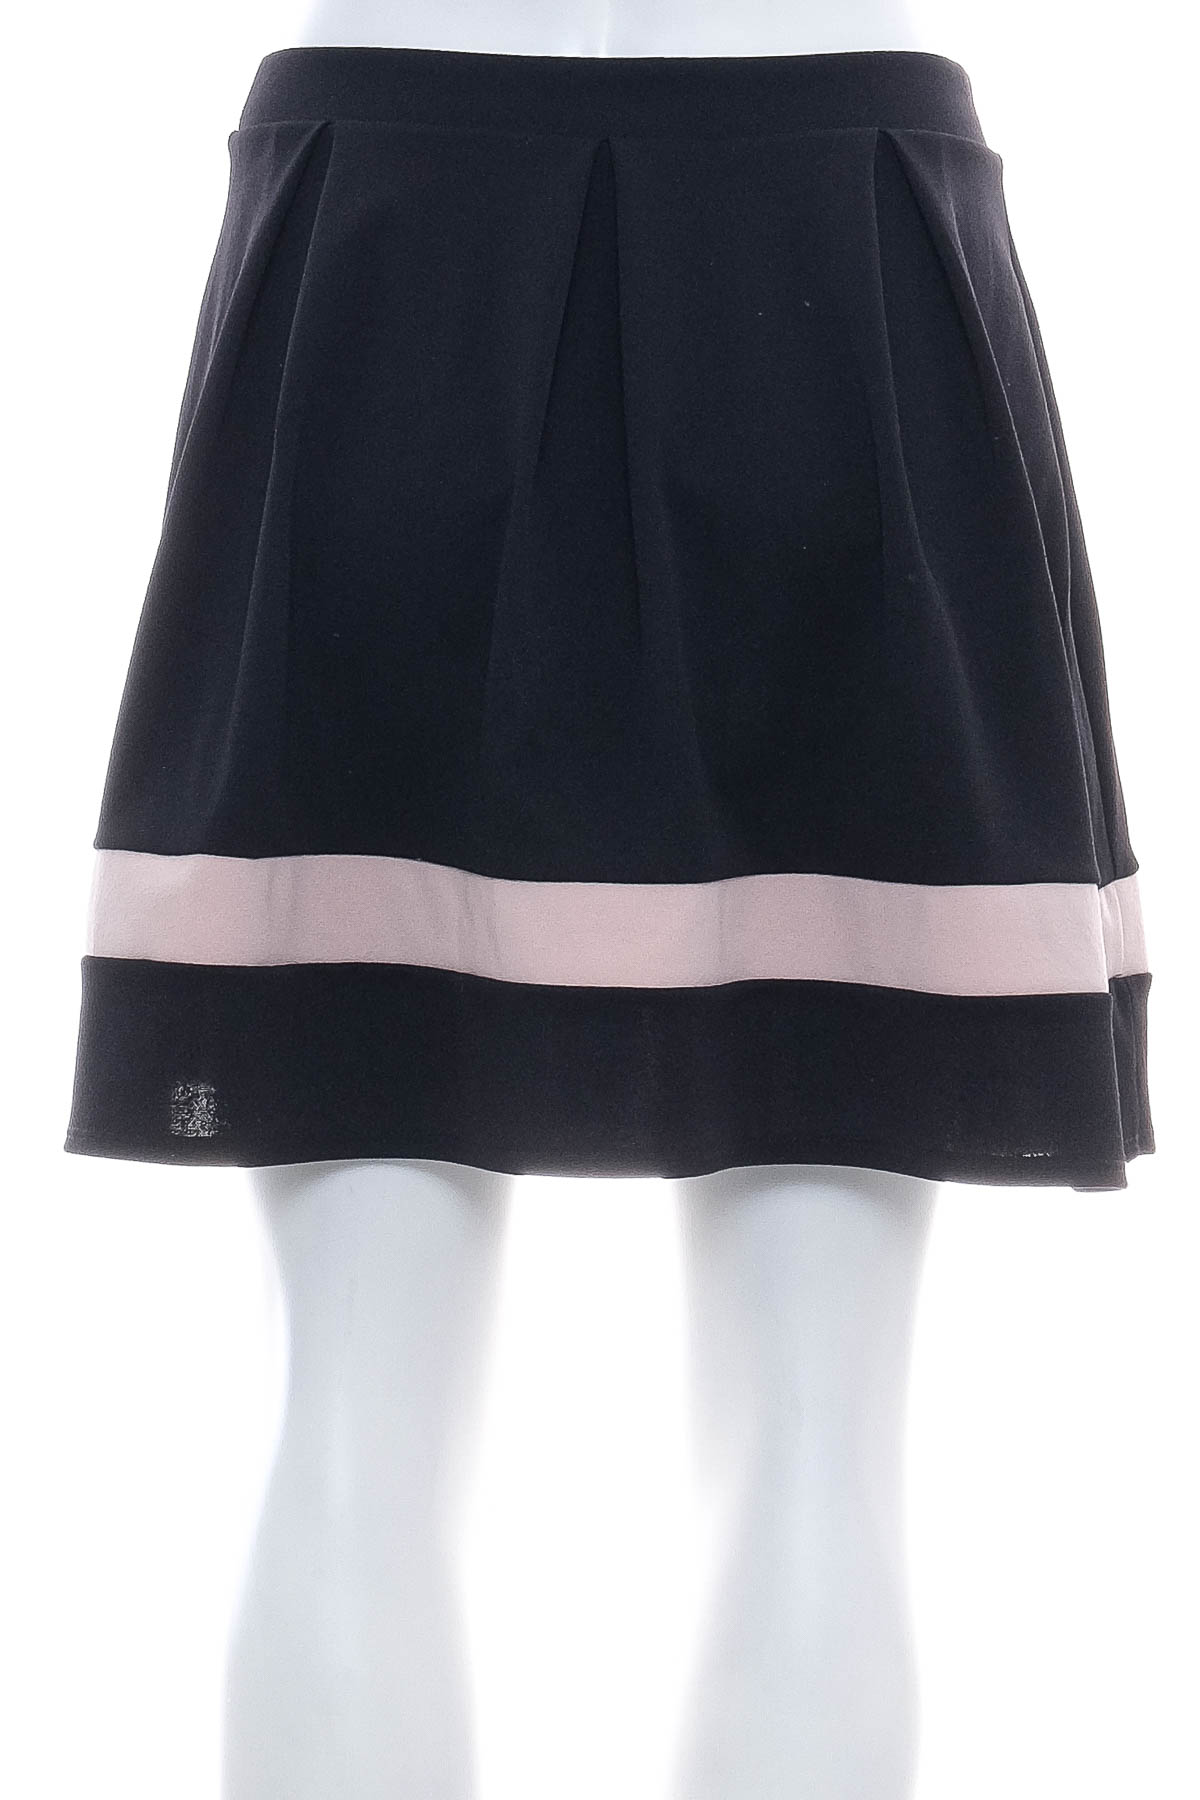 Girls' skirts - C&A - 1